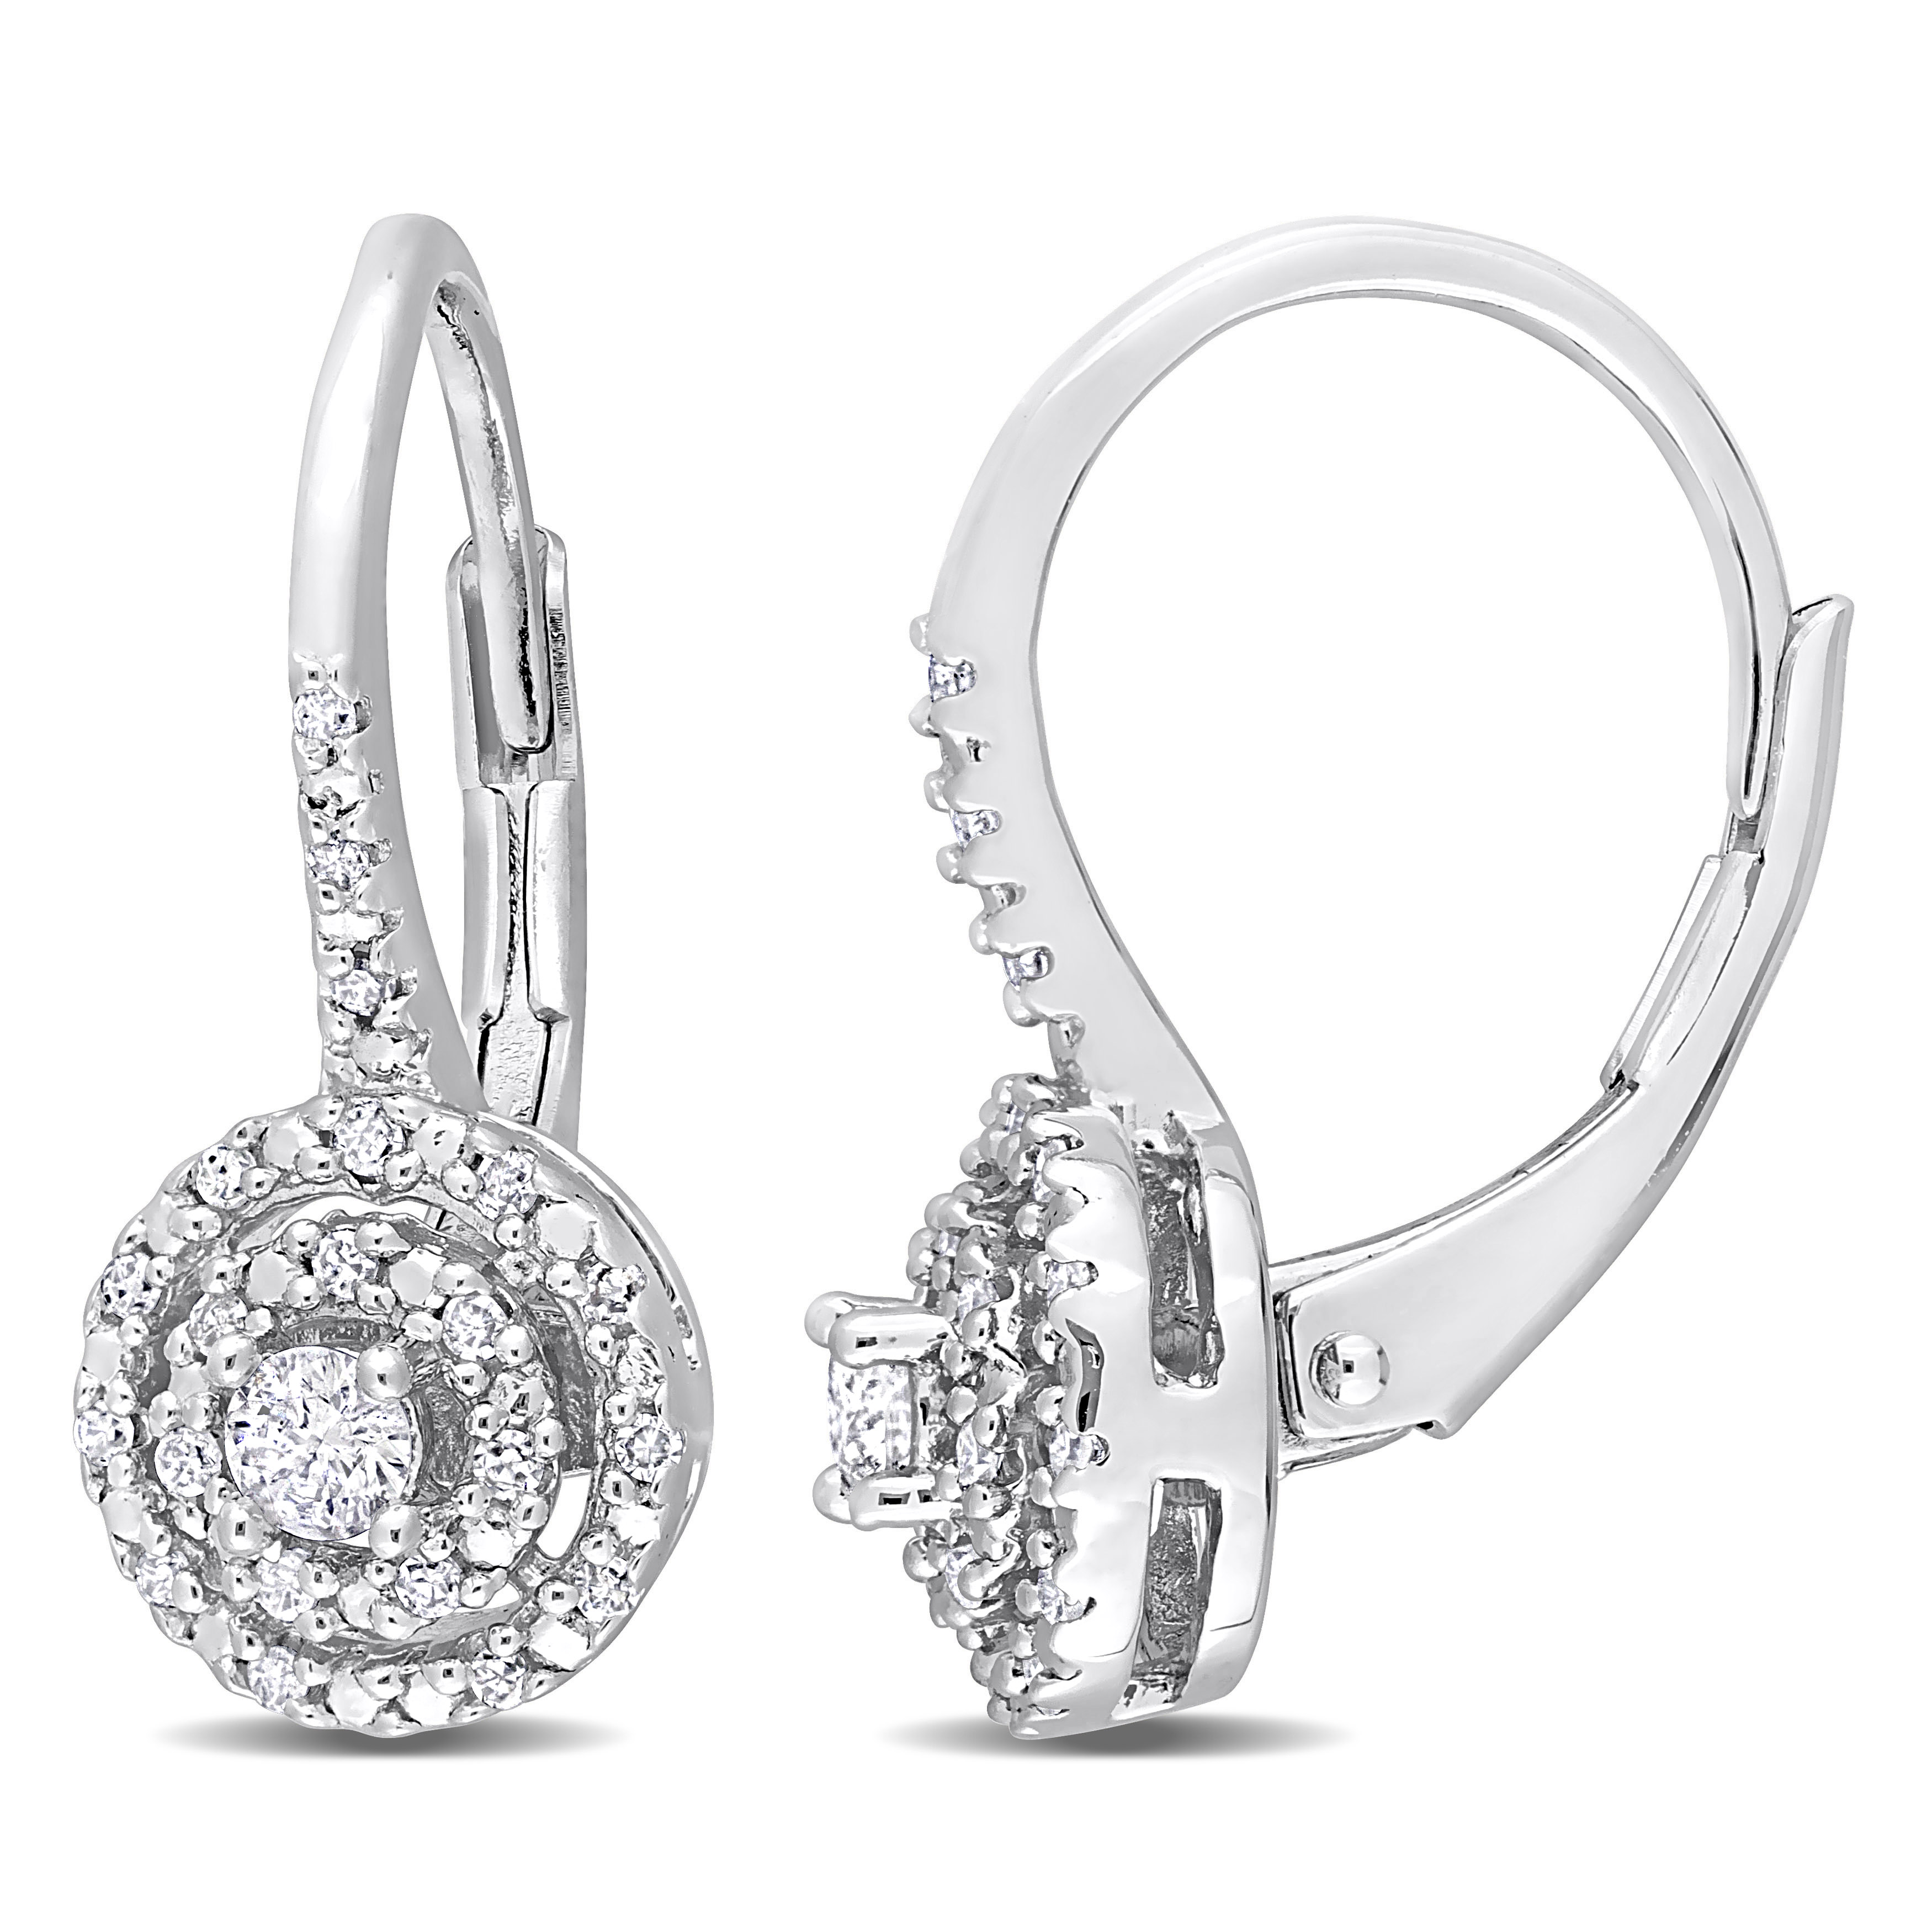 1/4 CT TW Diamond Double Halo Leverback Earrings in Sterling Silver